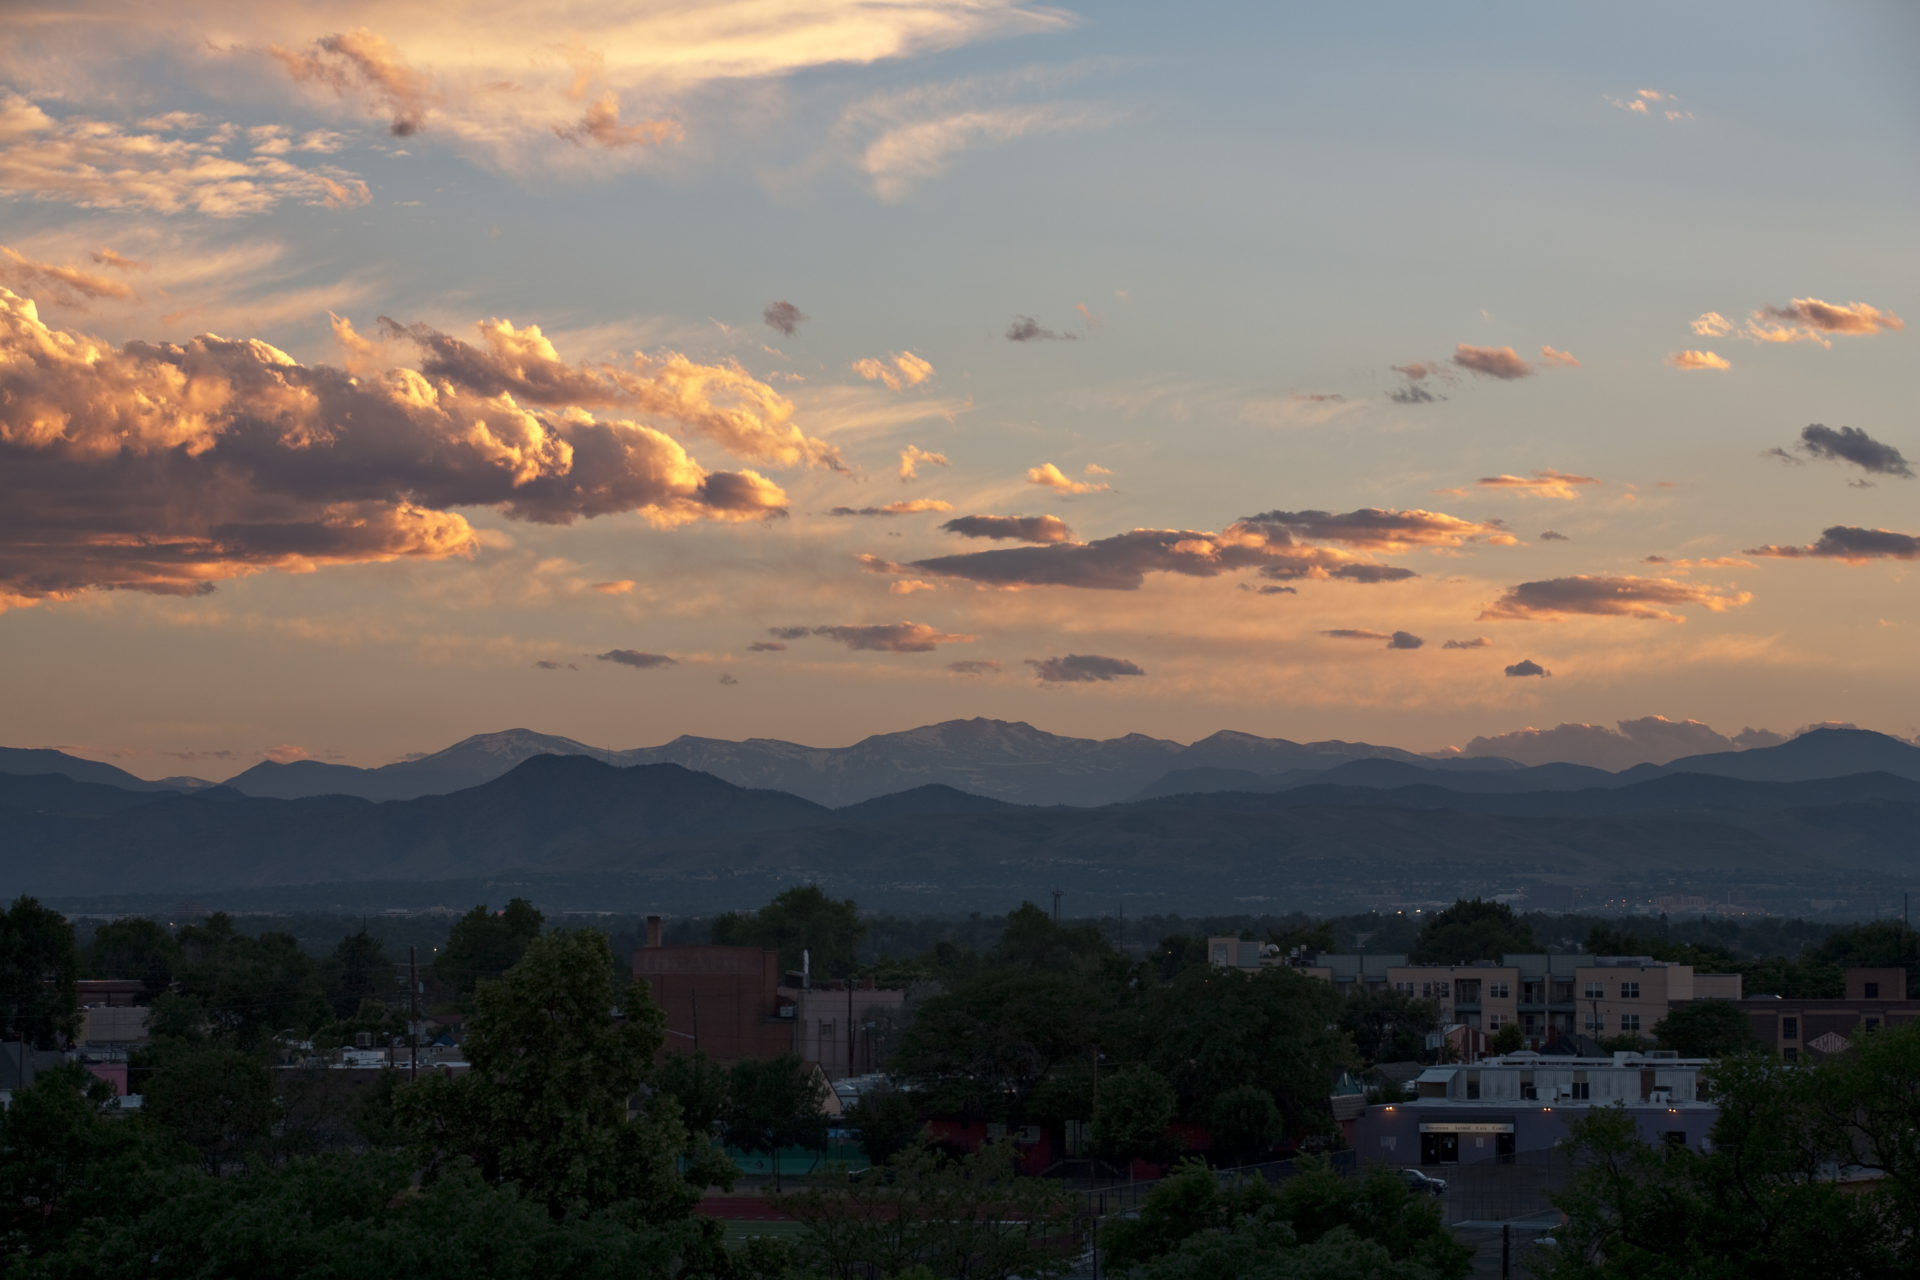 Mount Evans sunset - June 23, 2011